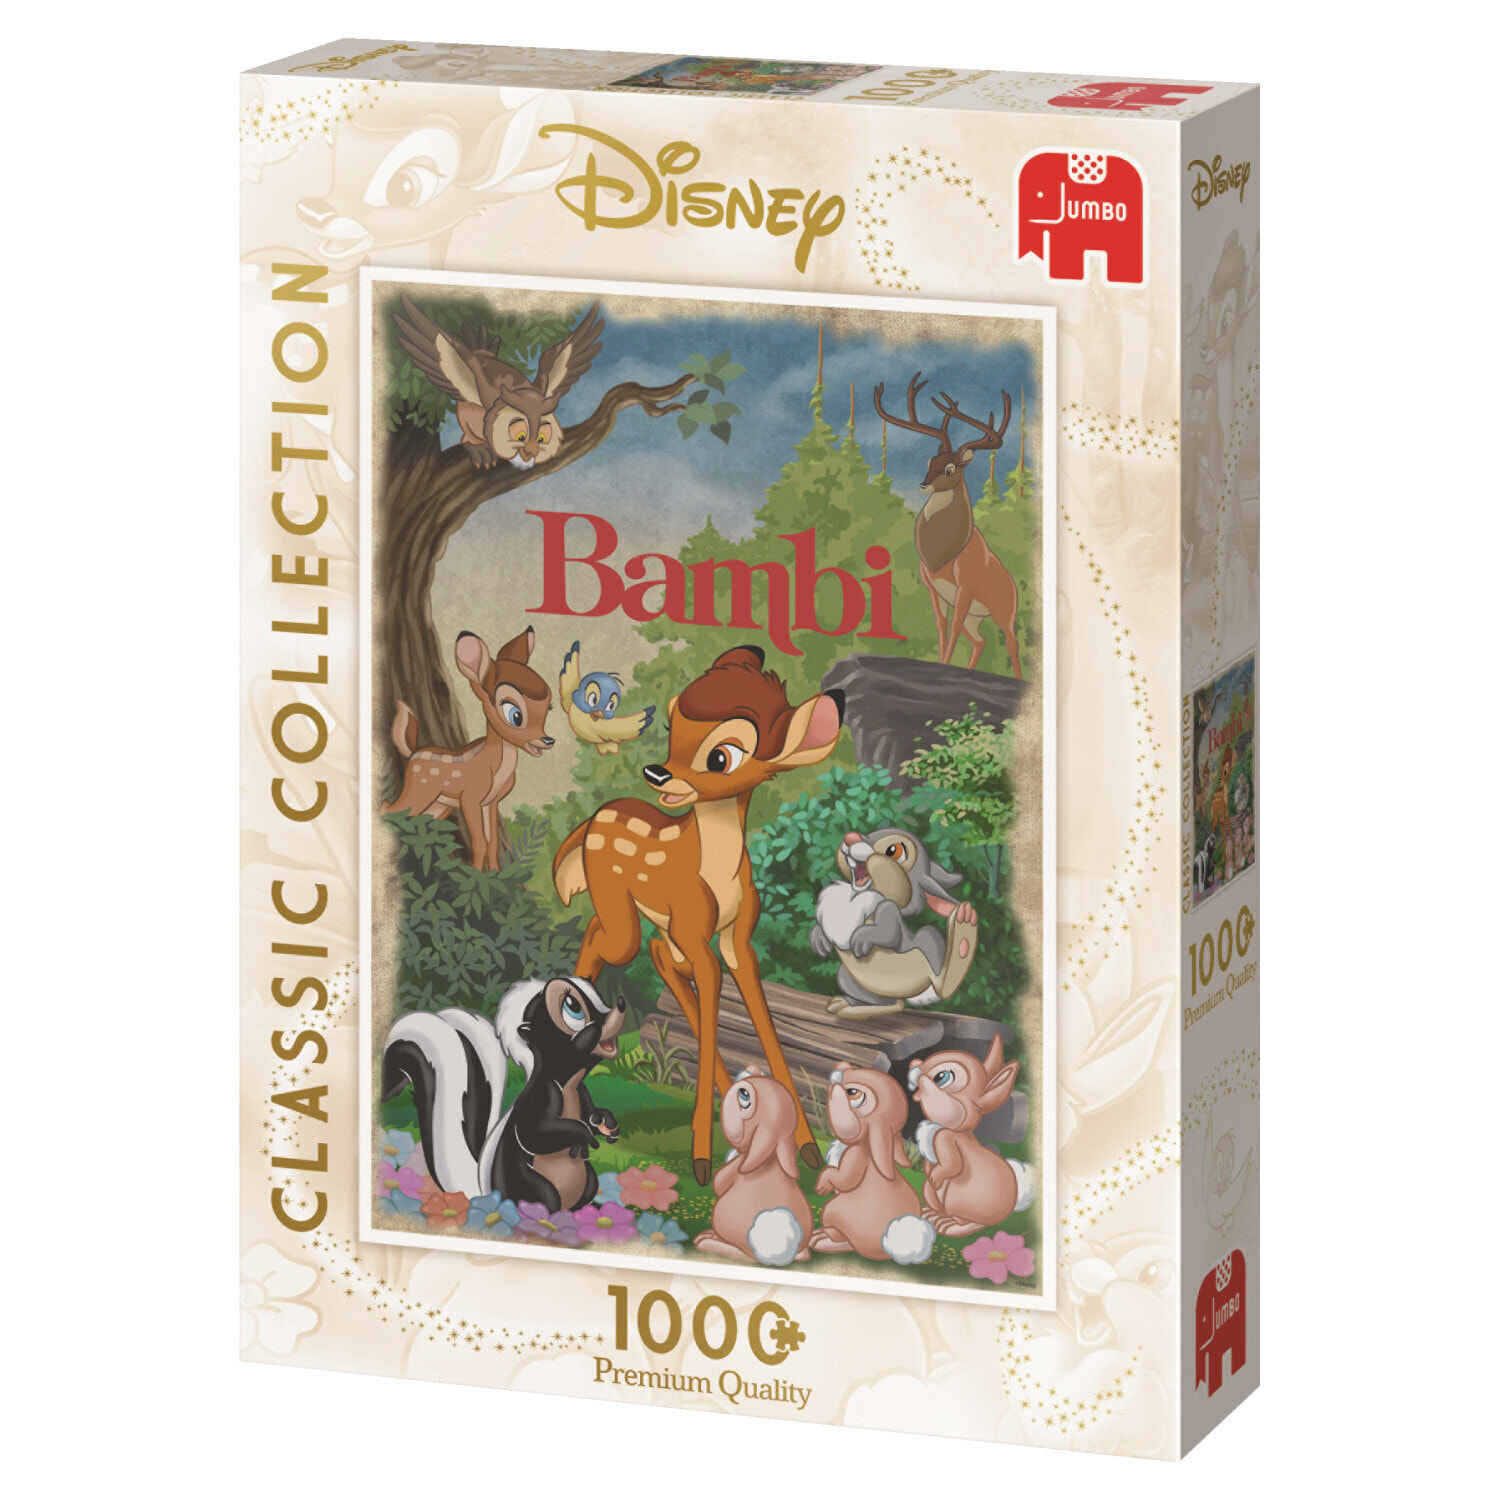 Disney Bambi Movie Poster 1000 pcs Составная картинка-головоломка 1000 шт 19491